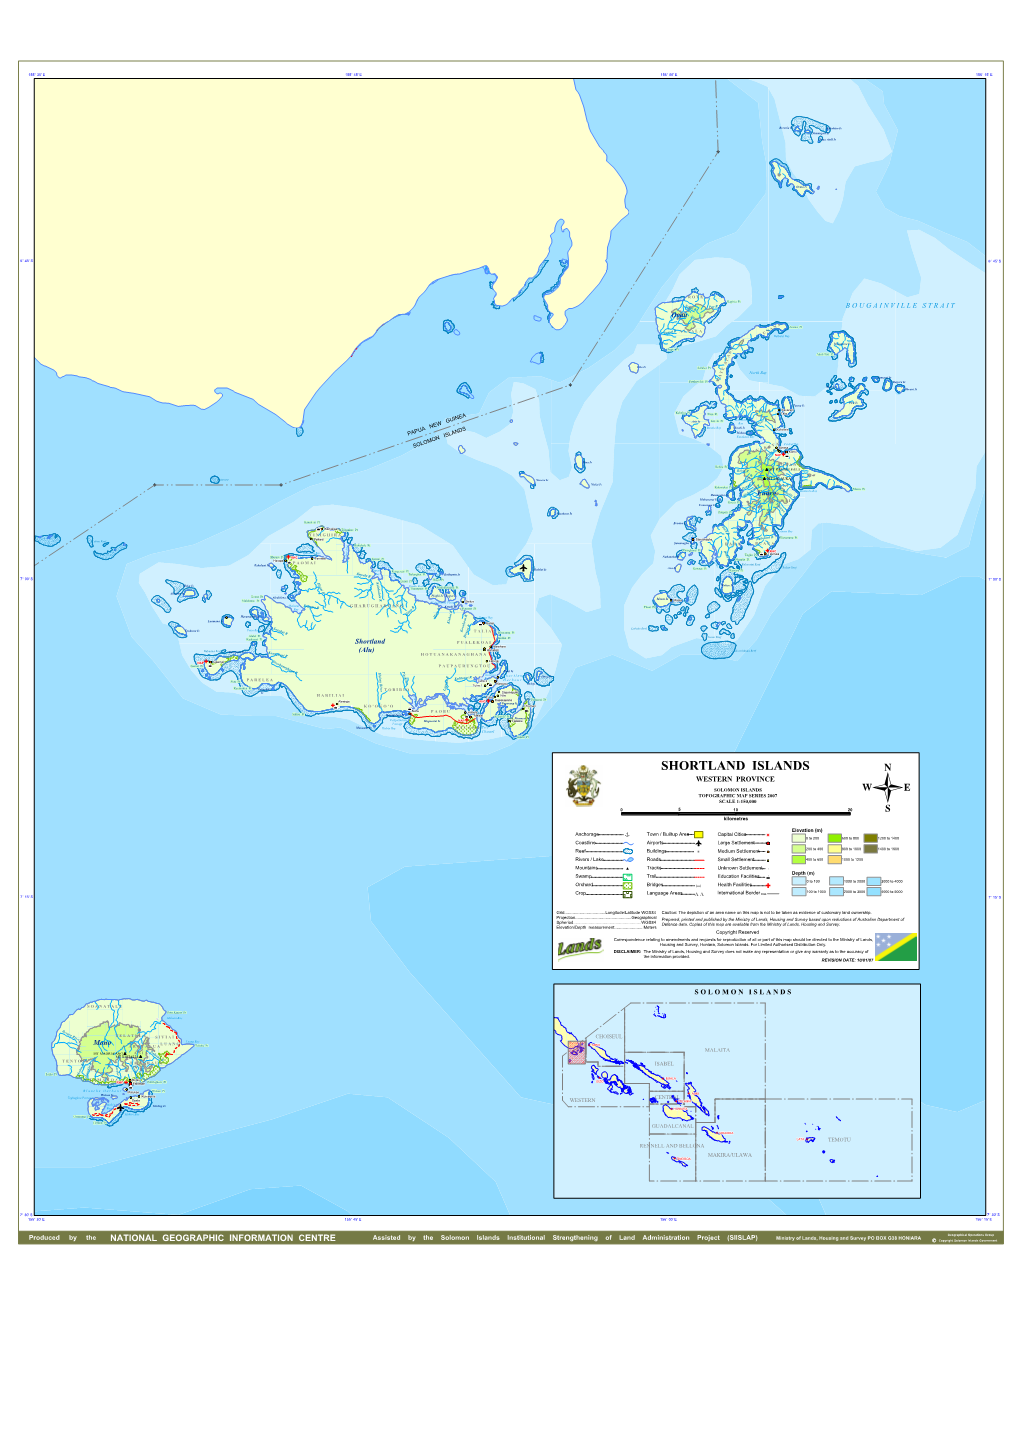 SHORTLAND ISLANDS WESTERN PROVINCE SOLOMON ISLANDS TOPOGRAPHIC MAP SERIES 2007 SCALE 1:150,000 5  0 10 20 Kilometres